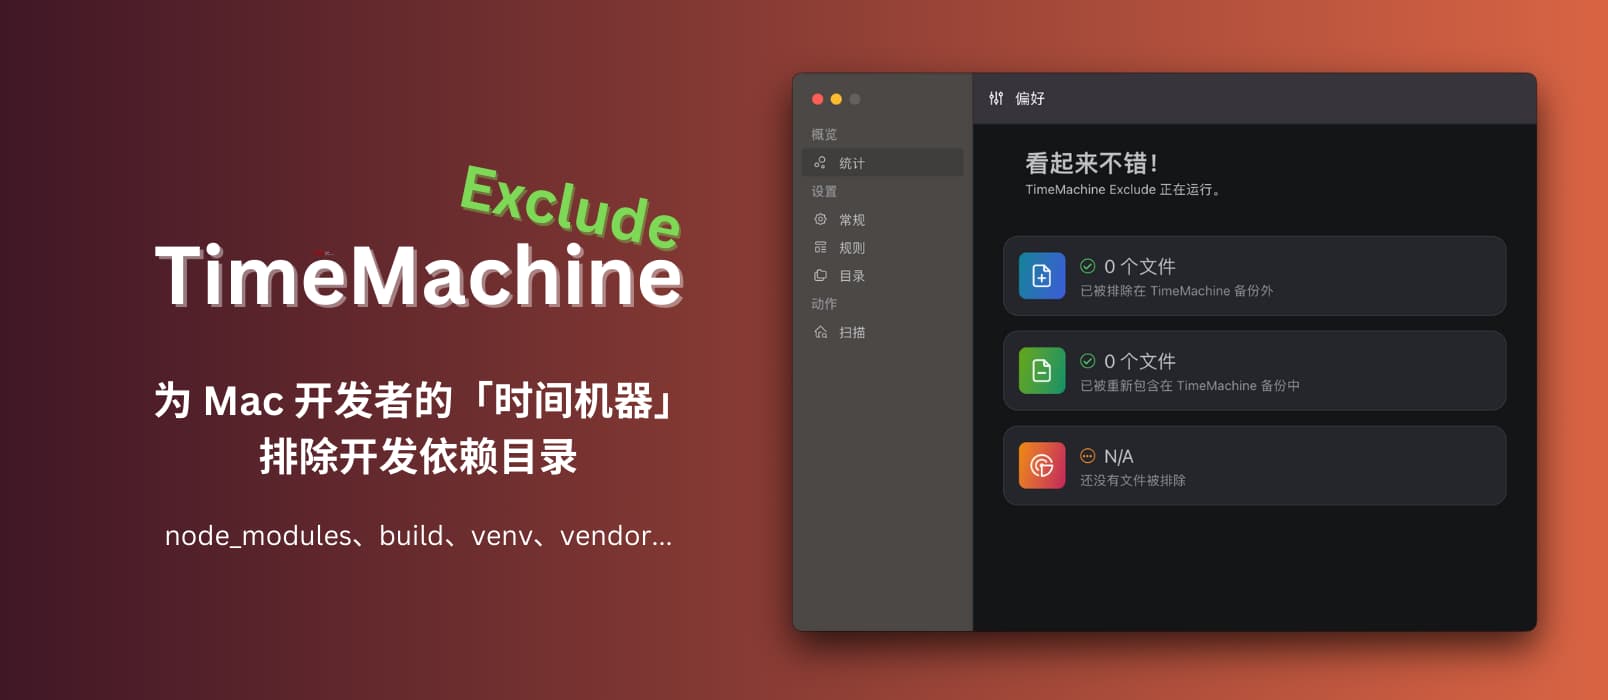 TimeMachine Exclude - Mac 开发者必备：备份时，为时间机器排除依赖目录（node_modules、build、venv、vendor 等）